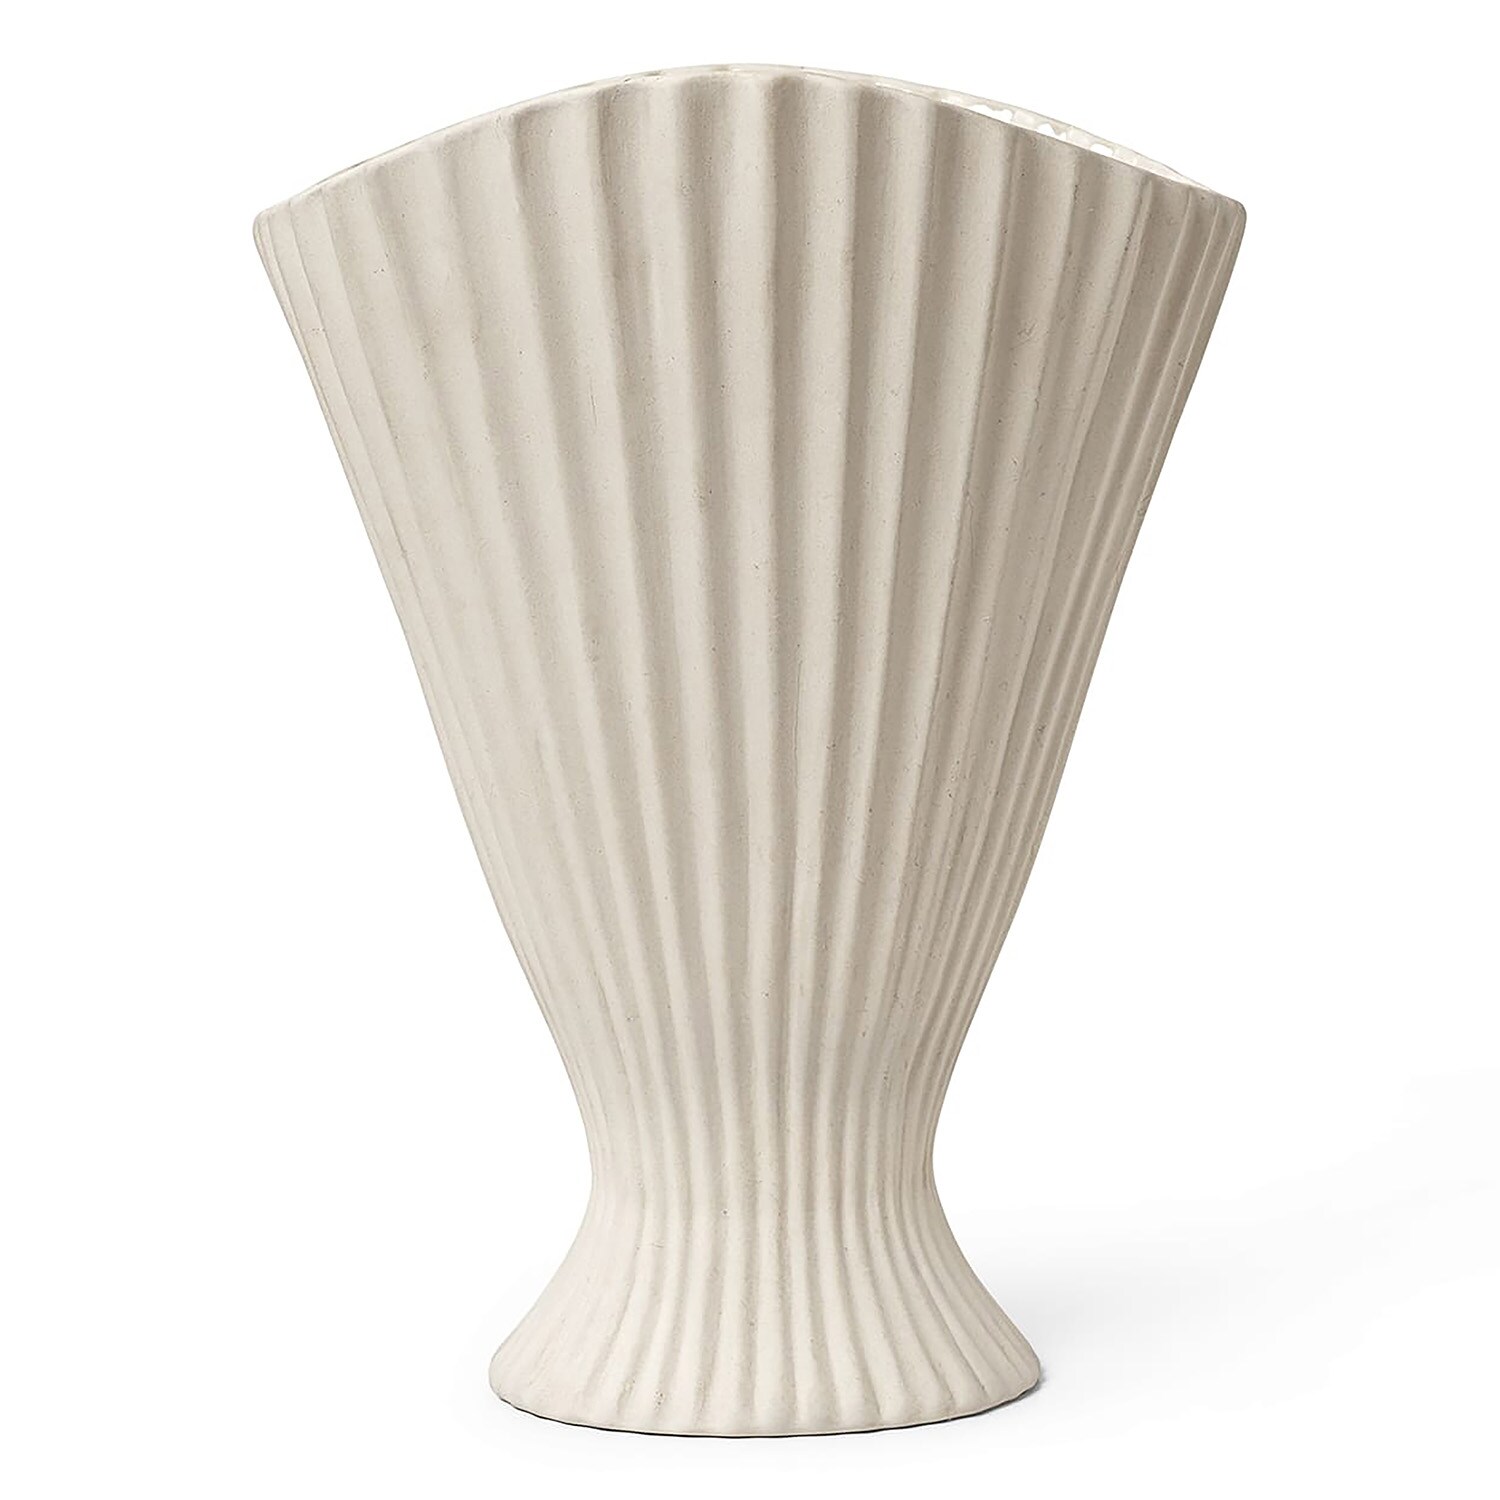 Uredelighed dukke demonstration Fountain Vase, Offwhite - Ferm Living @ RoyalDesign.dk